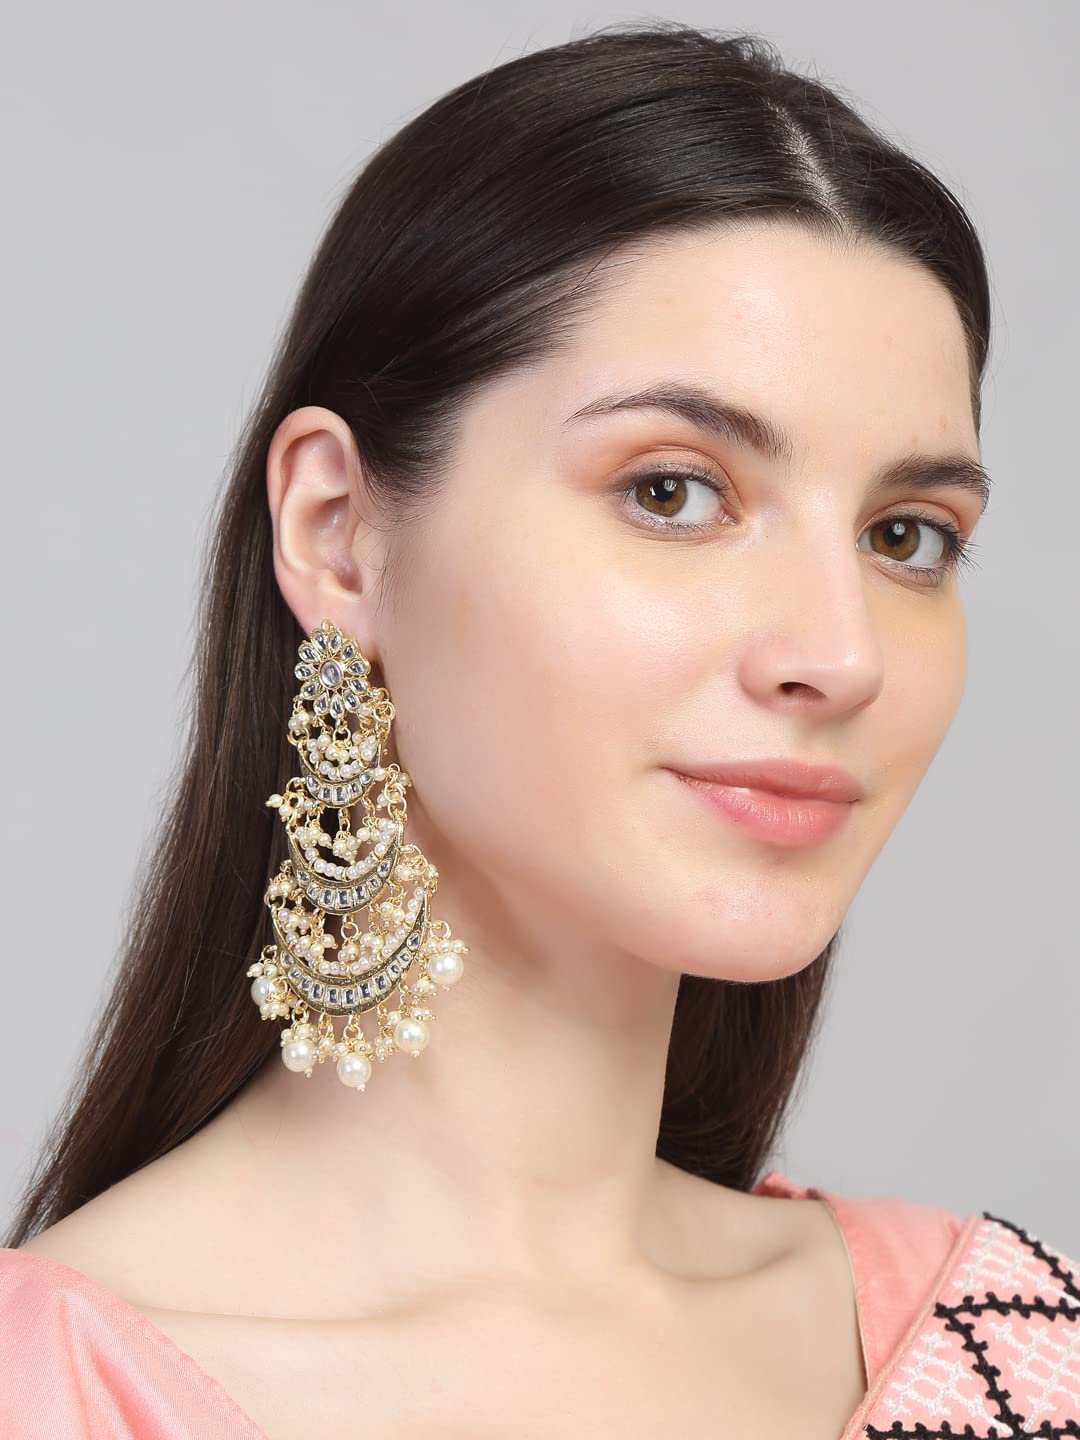 Yellow Chimes Chandbali Earrings for Women Gold Plated Kundan Studded 3 Layered Lond Chand bali Earrings for Women and Girls